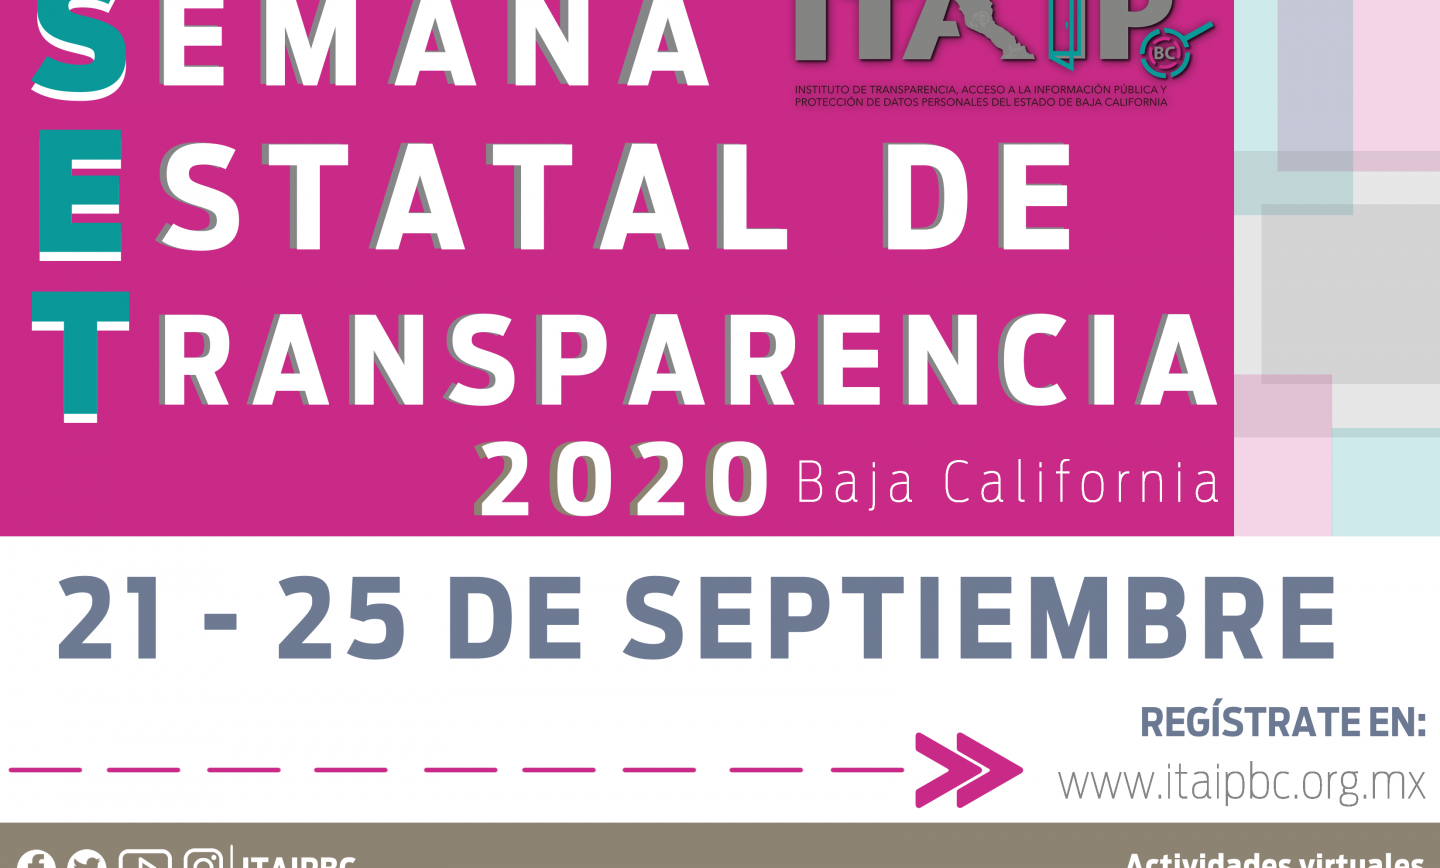 INSTITUTO DE TRANSPARENCIA DE BAJA CALIFORNIA INVITA A LA SEMANA ESTATAL DE TRANSPARENCIA 2020